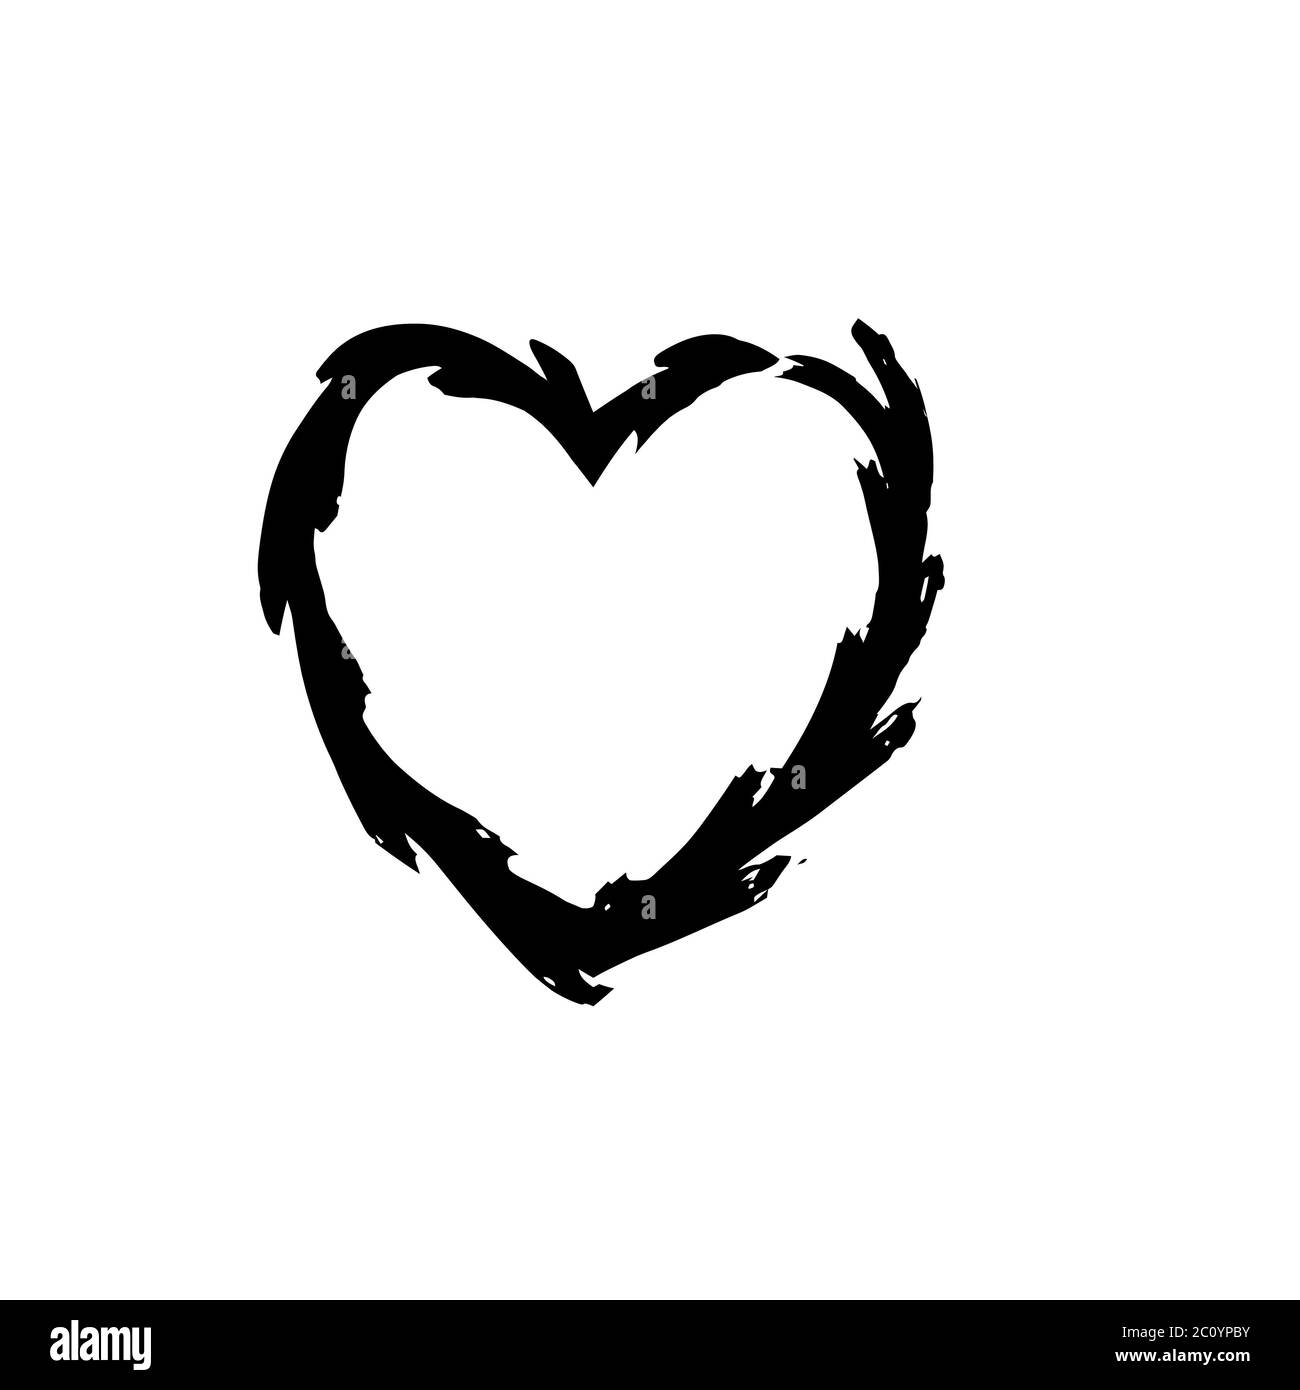 heart shape symbol love vector black Stock Photo - Alamy